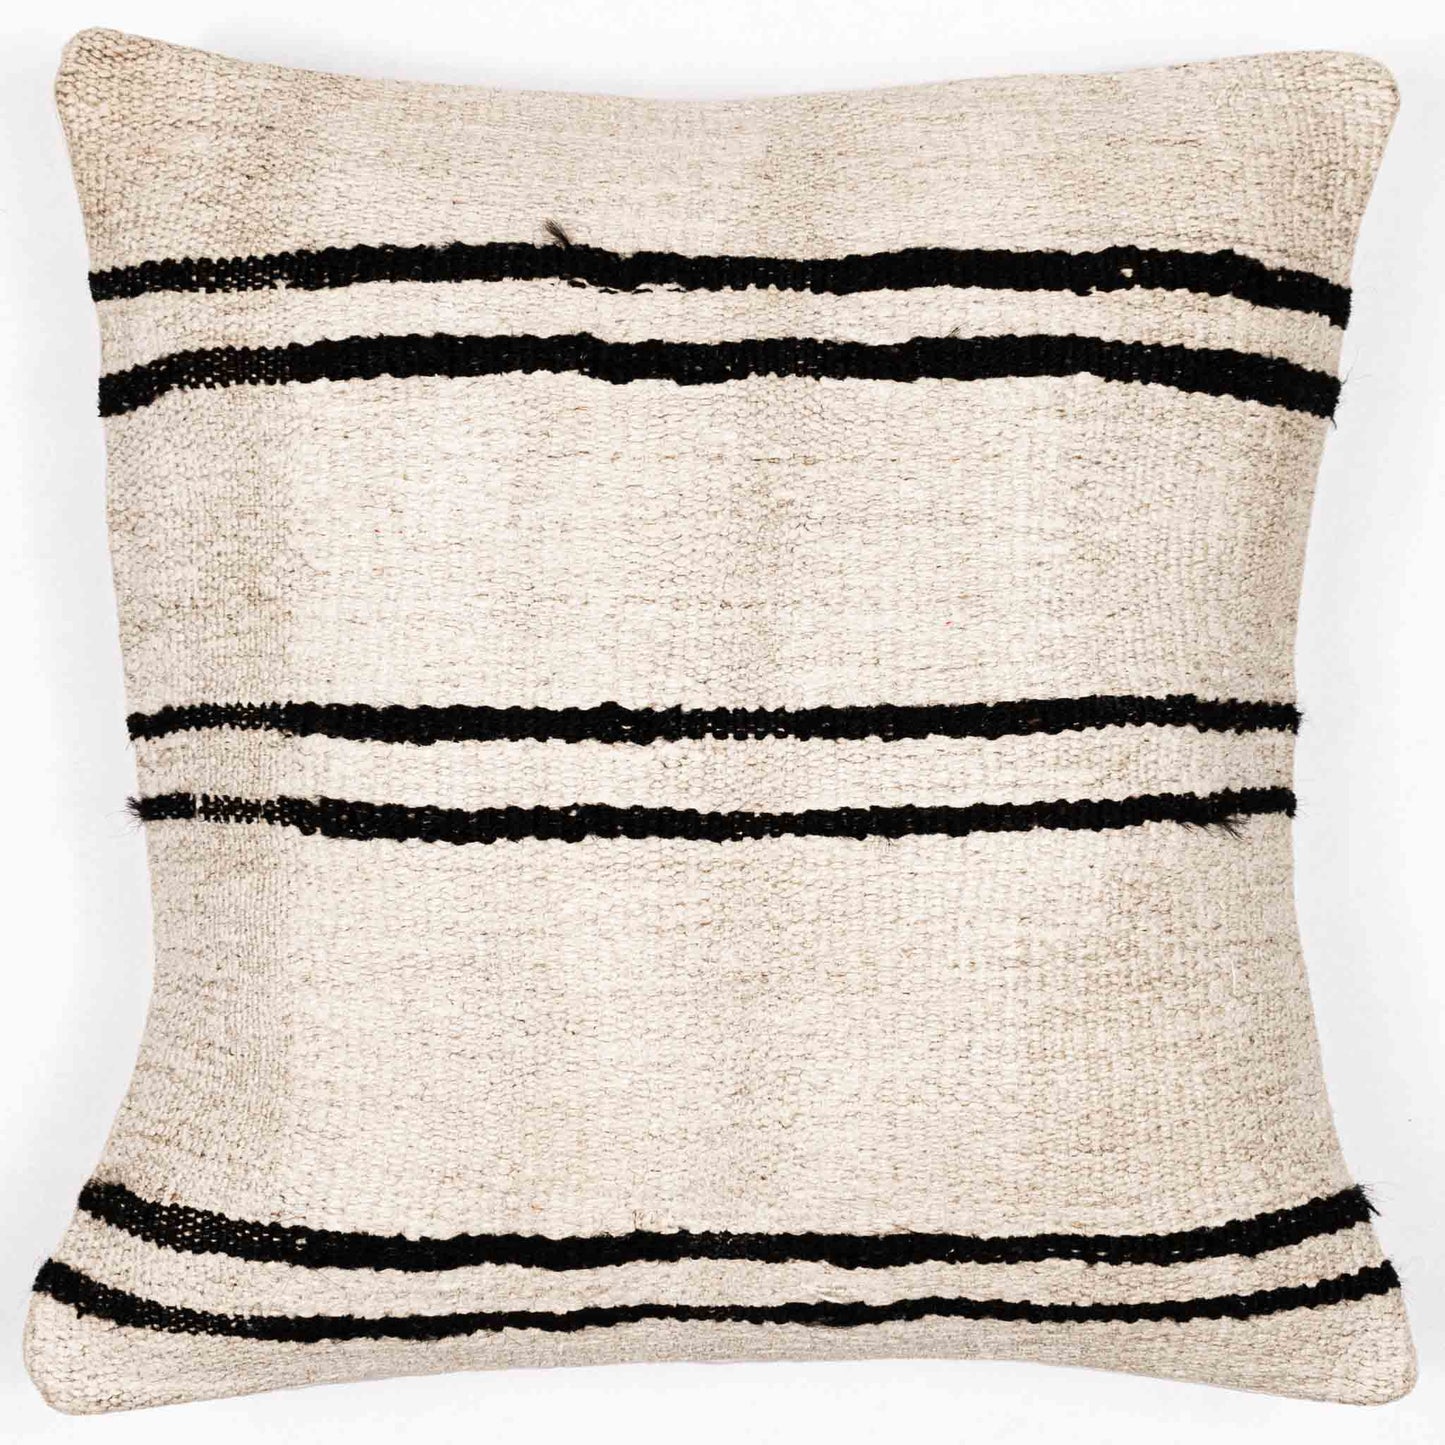 Handwoven Turkish kilim sisal pillow cover in khaki with espresso stripes.